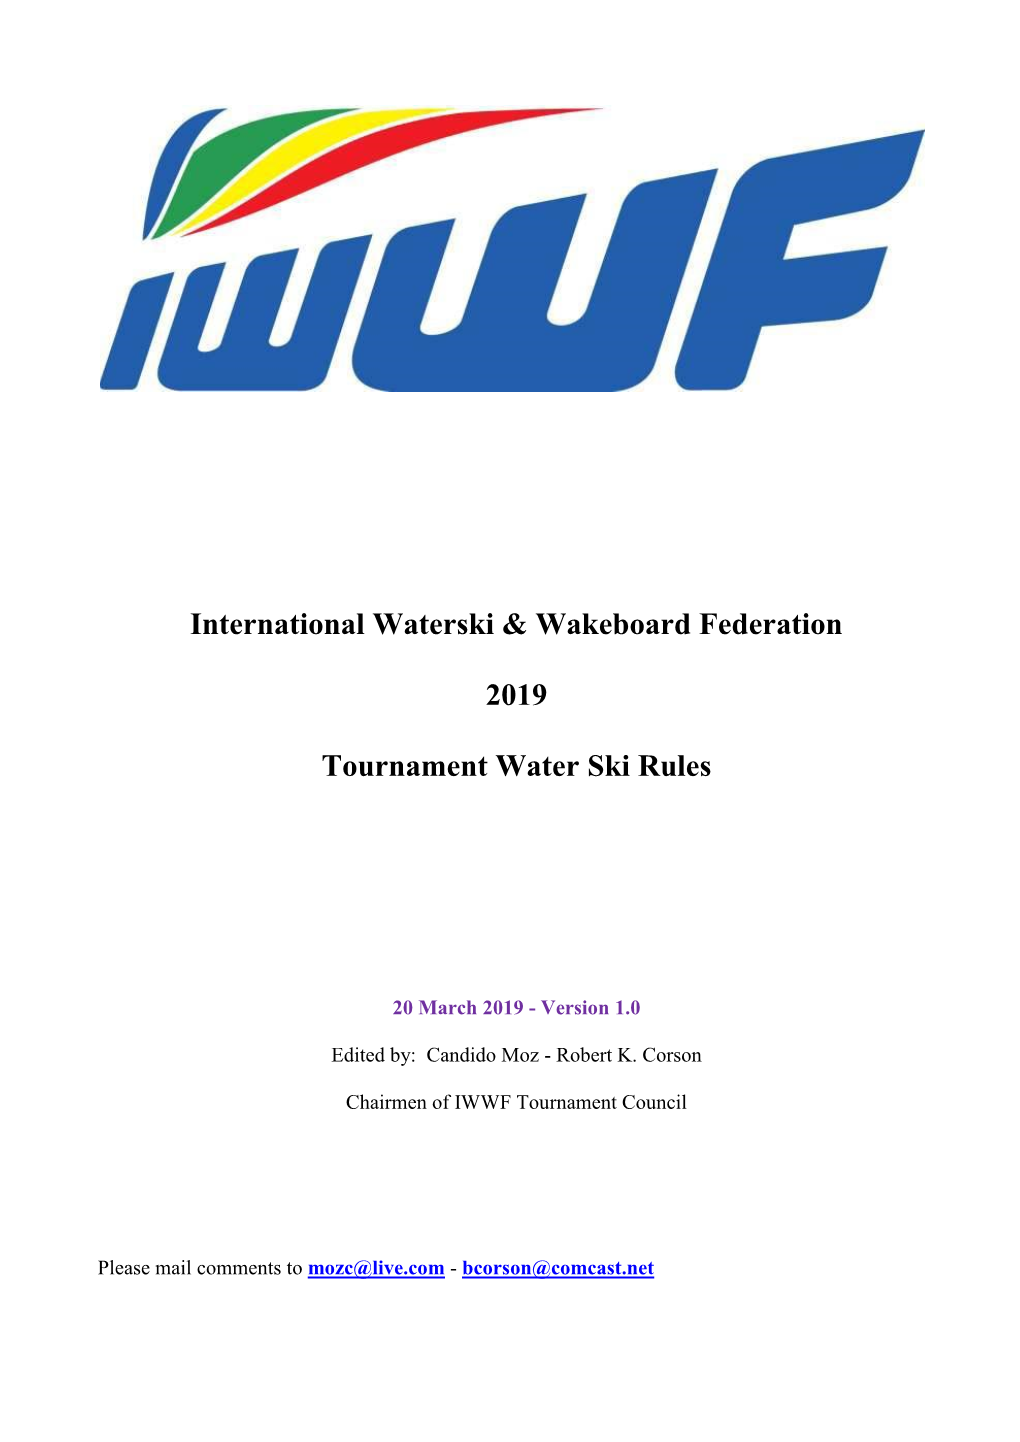 International Waterski & Wakeboard Federation 2019 Tournament Water Ski Rules